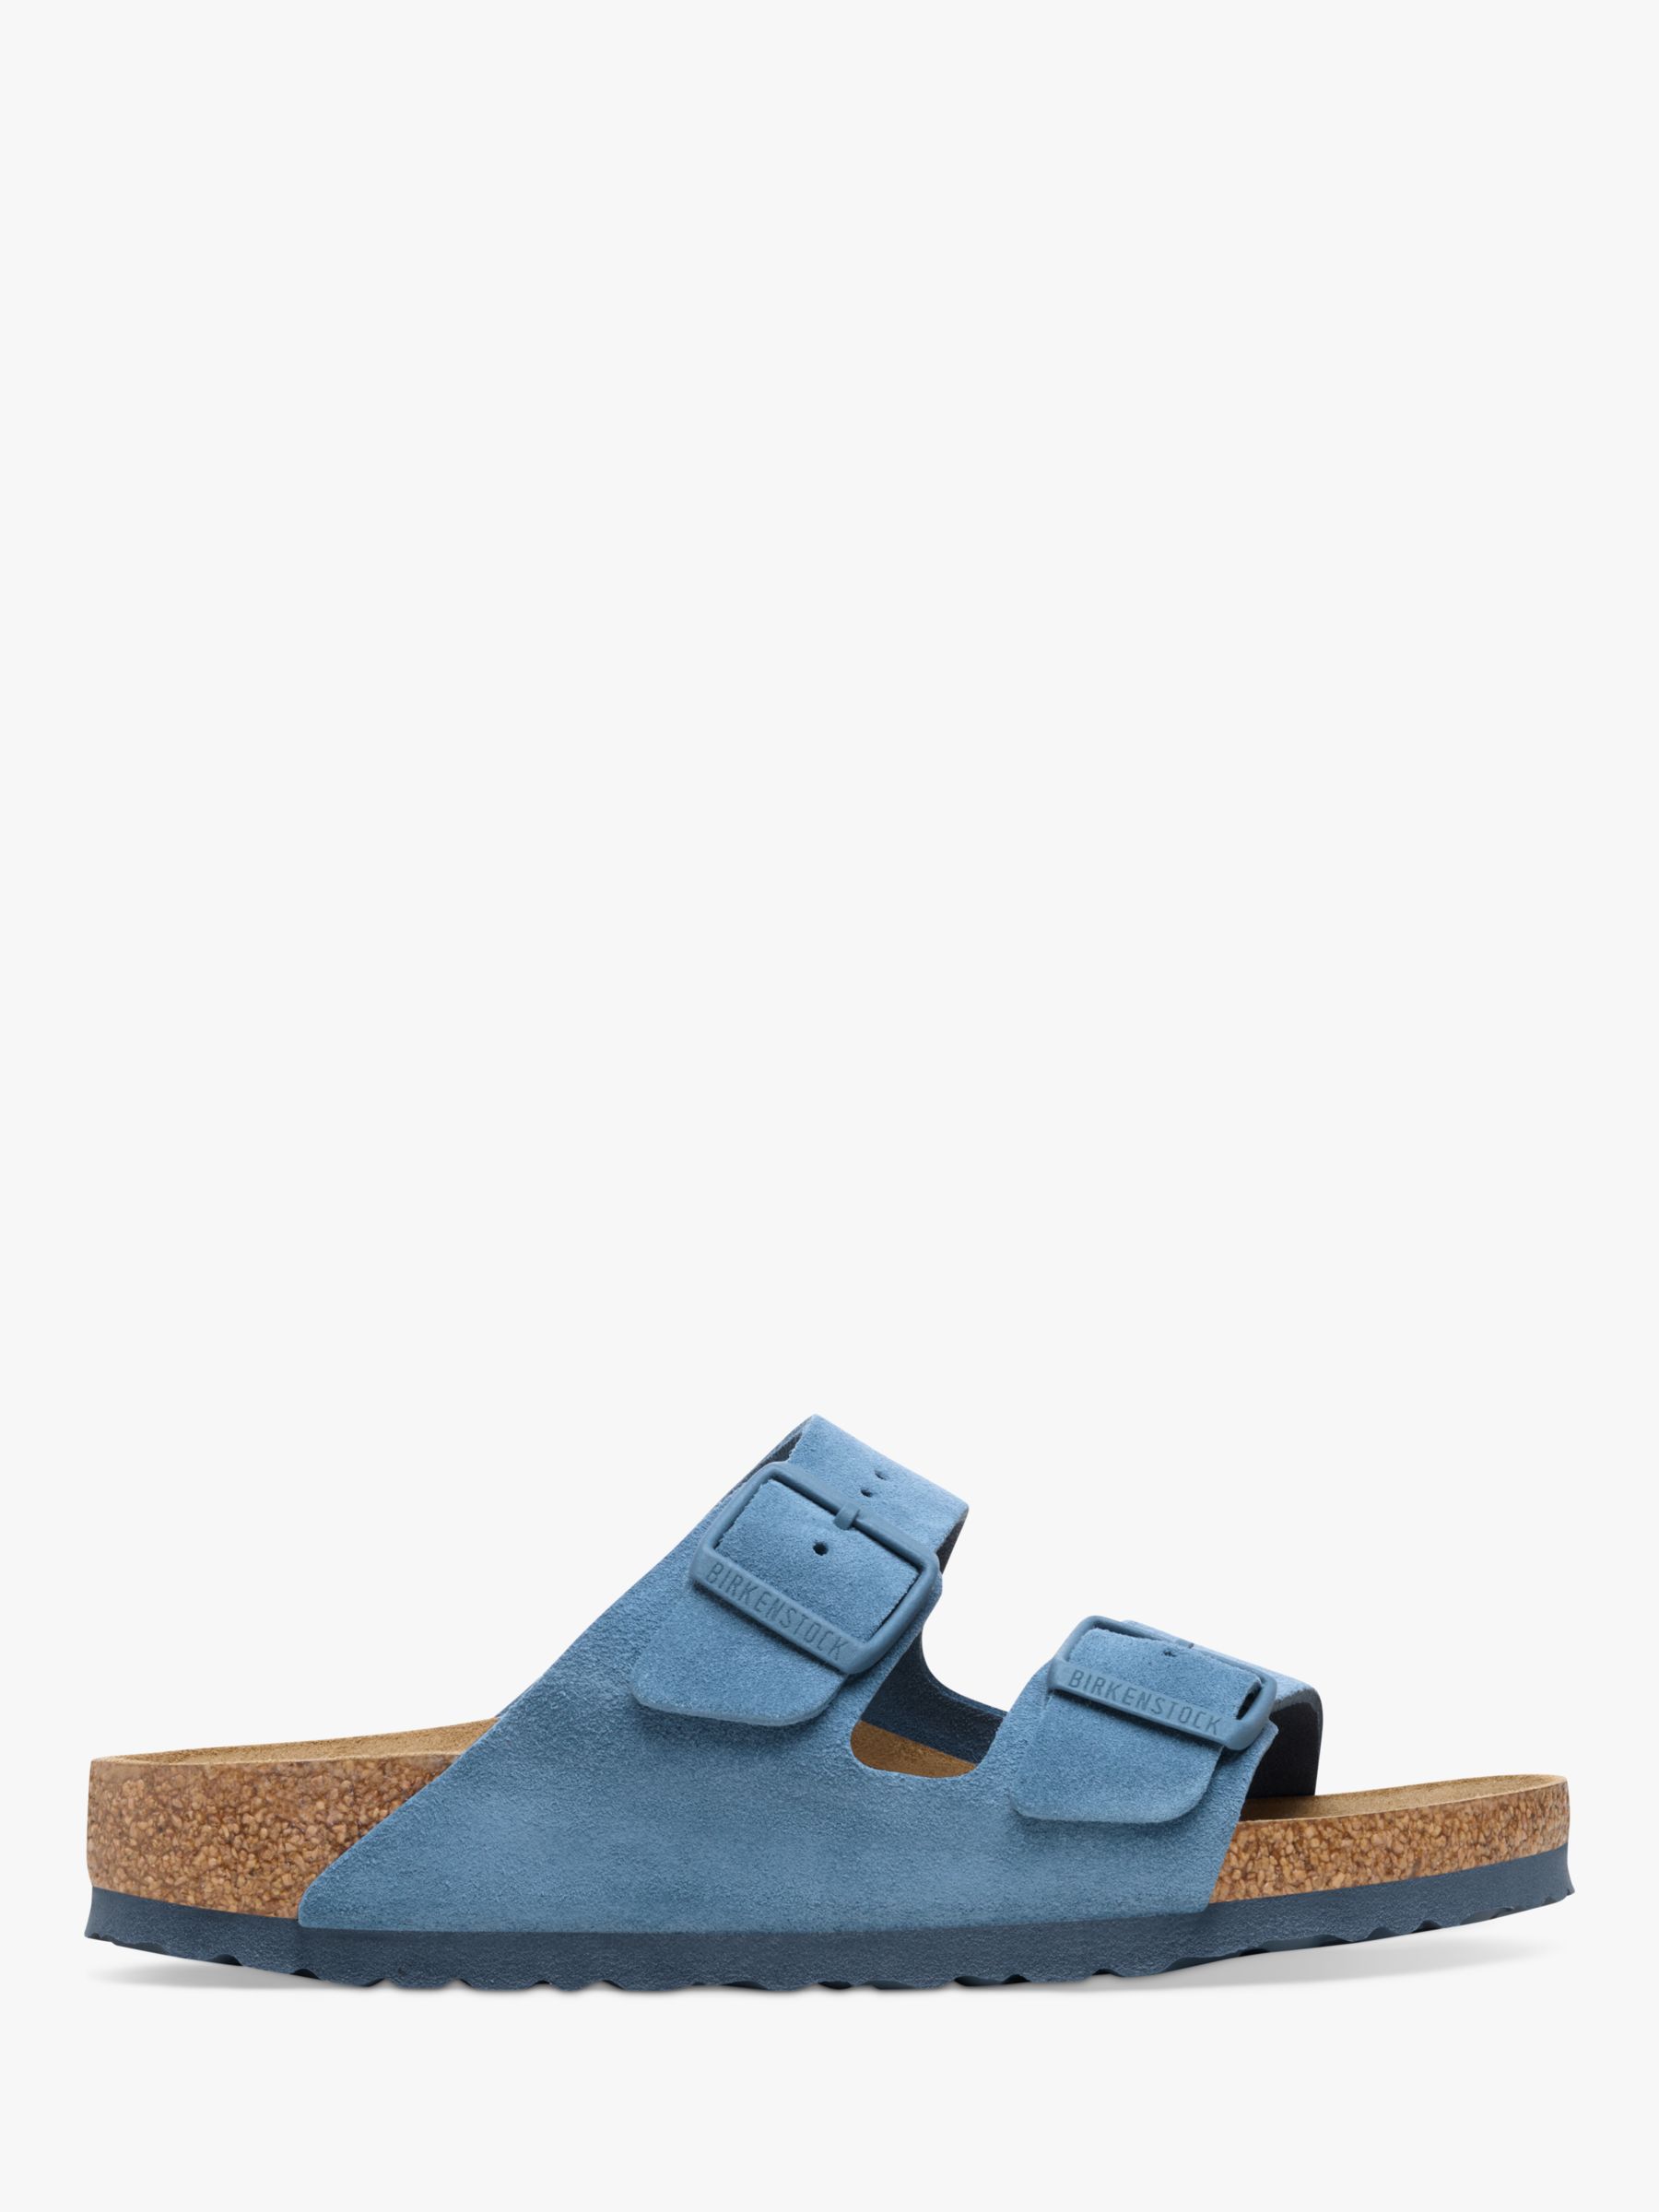 Birkenstock Arizona Suede Sandals, Elemental Blue, 38